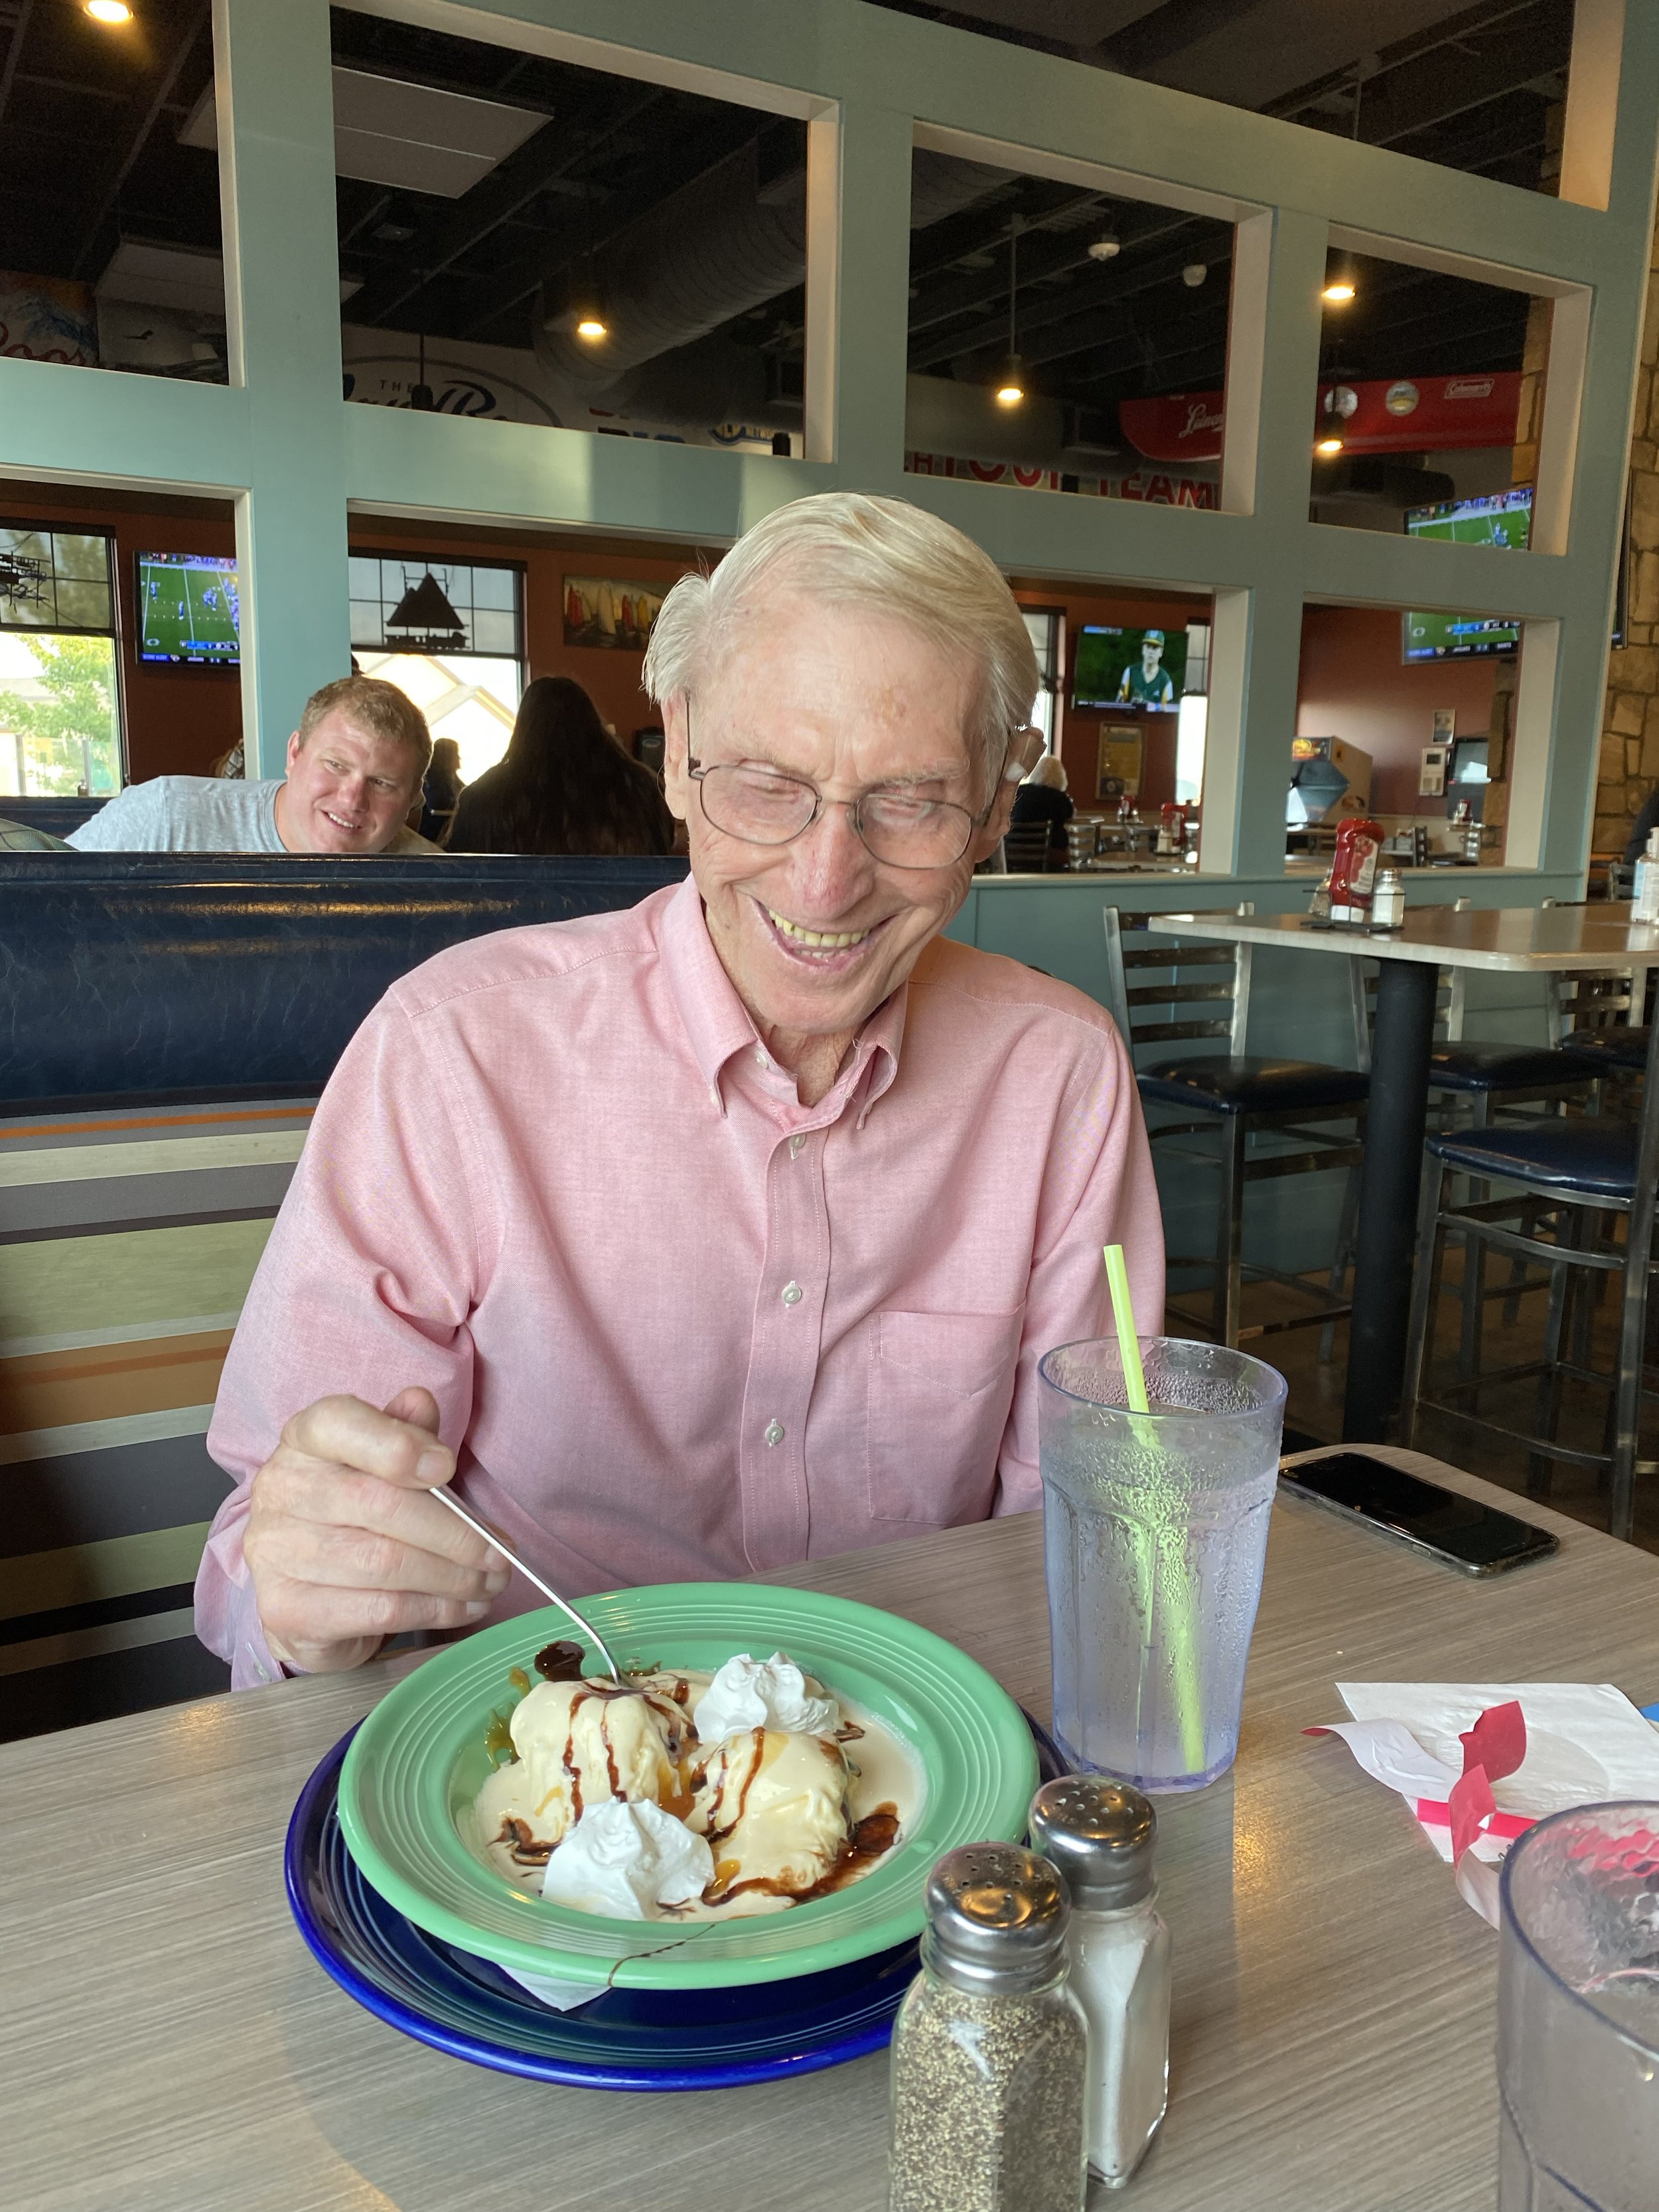  Warren on his 93rd birthday, enjoying ice cream at The SandBar and Grill. 